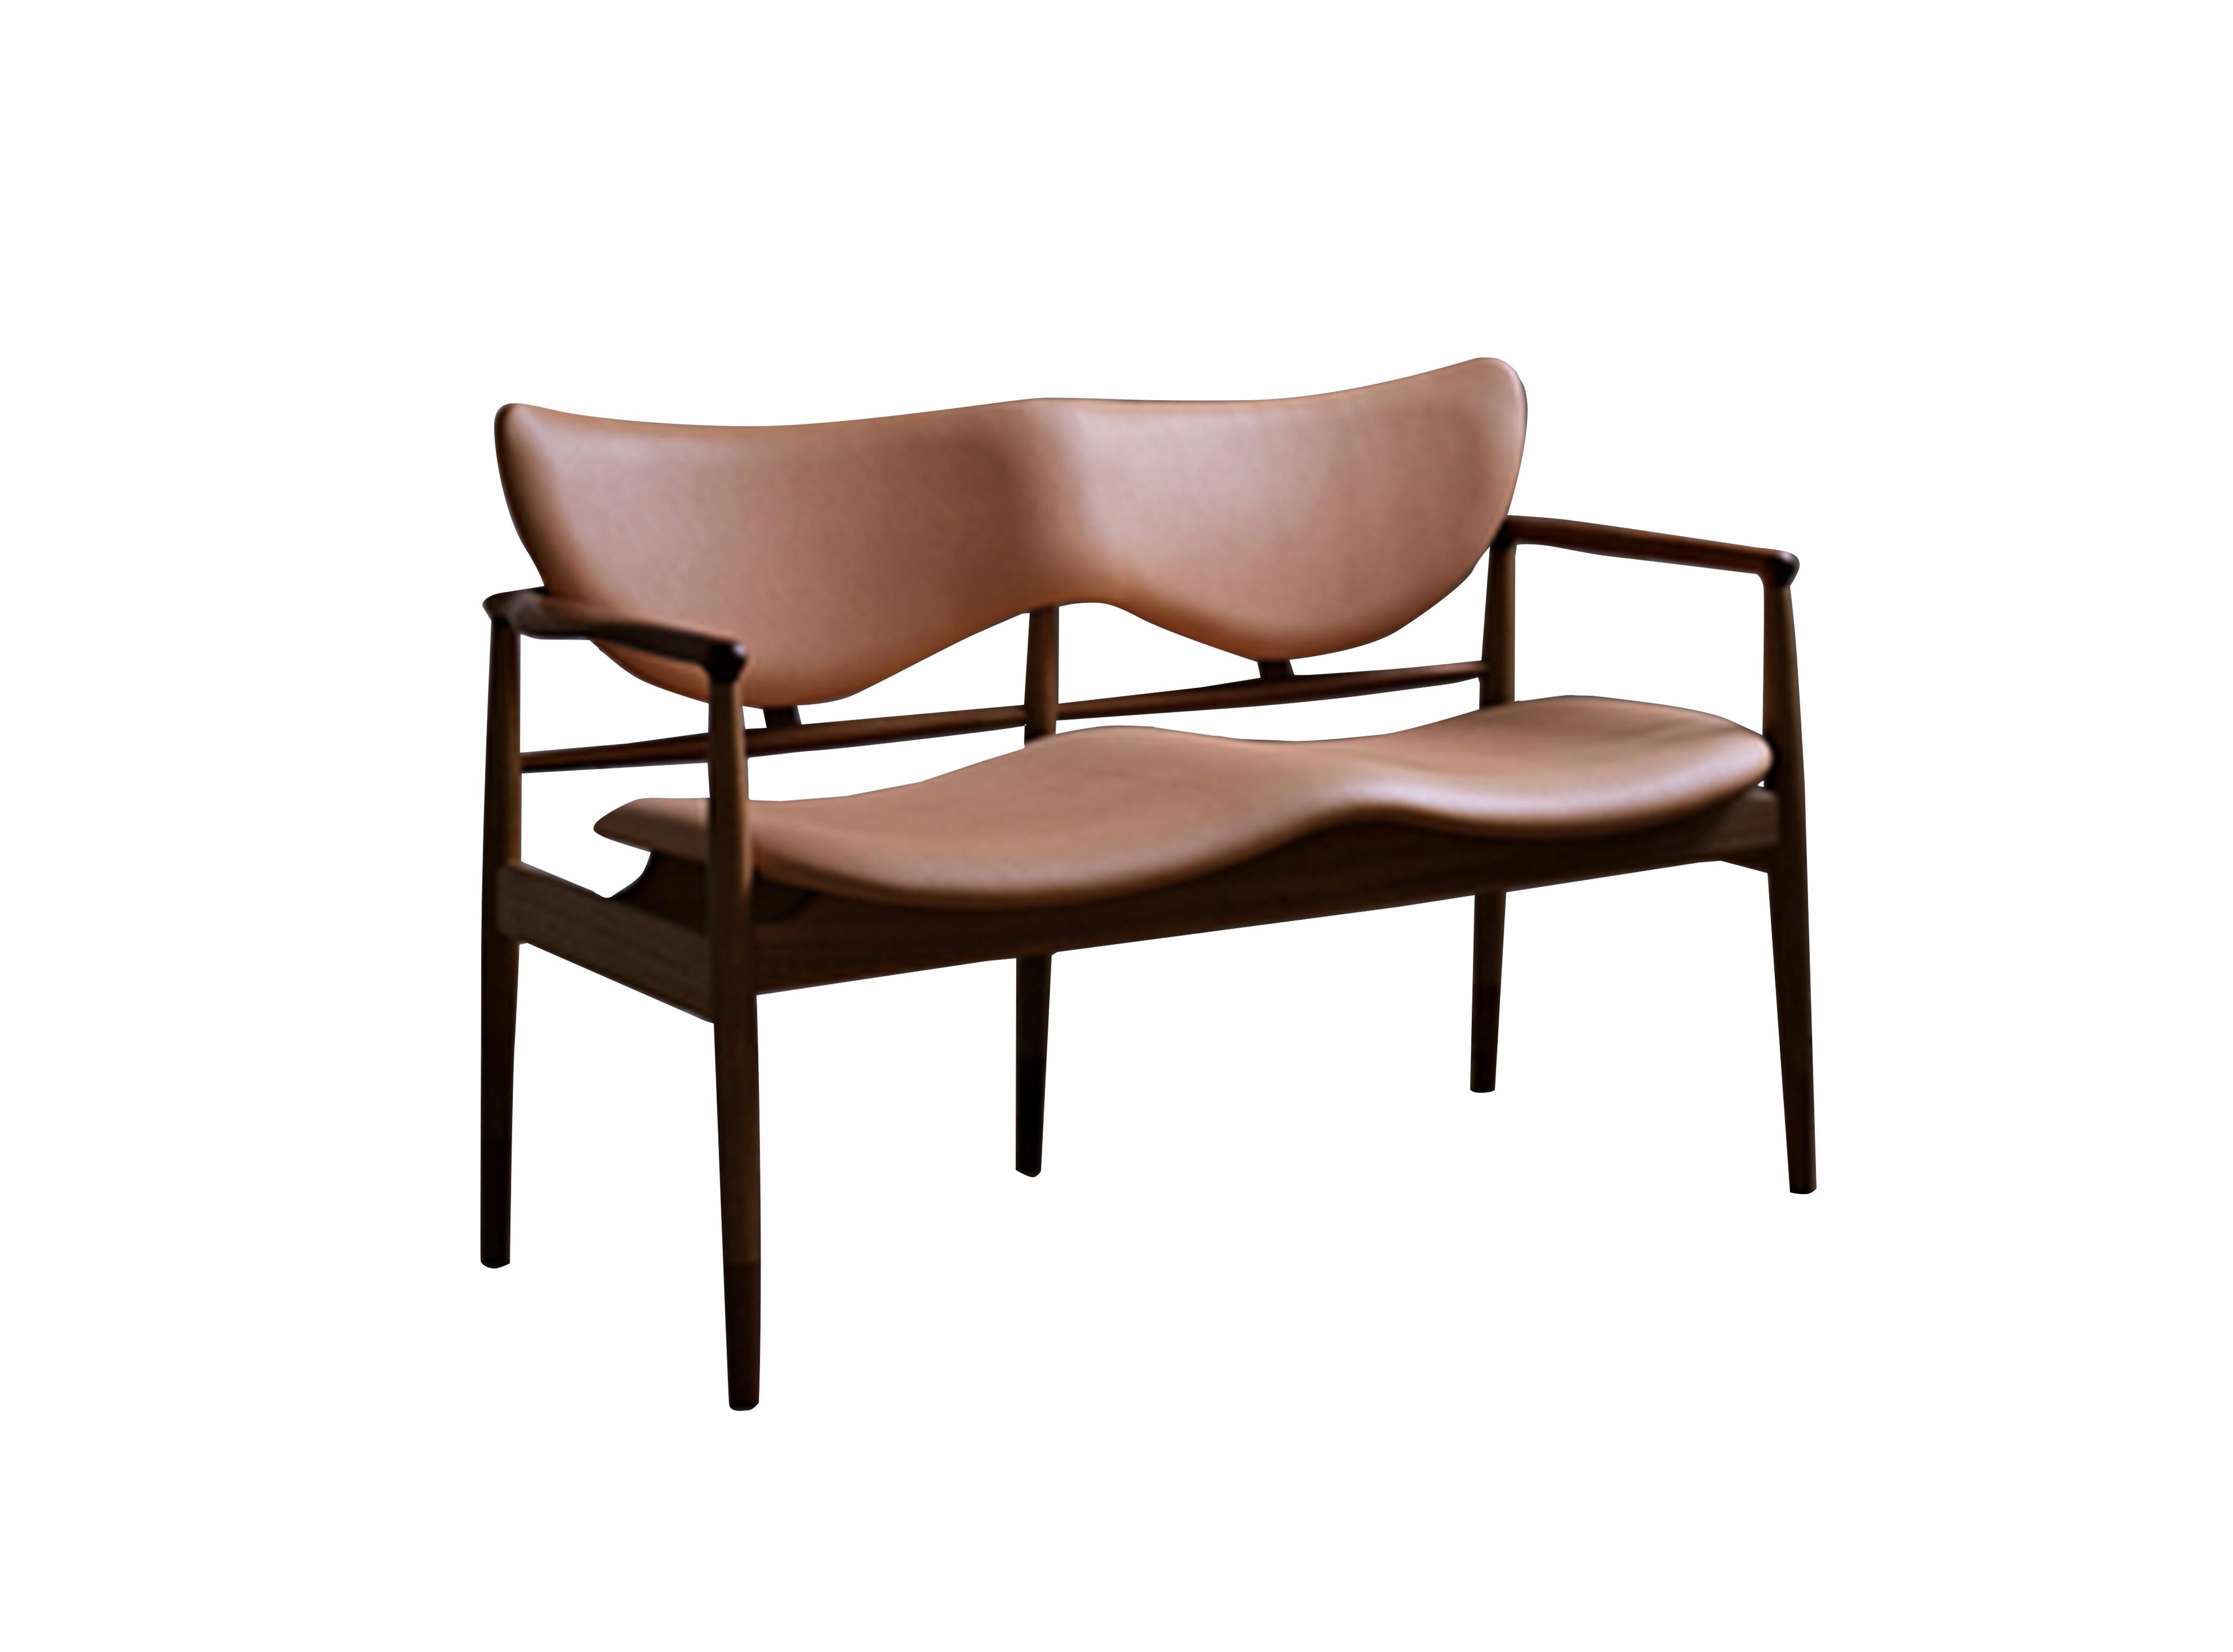 Finn Juhl 48 Sofa Bench Wood and Leather Iconic Danish Modern Design 1